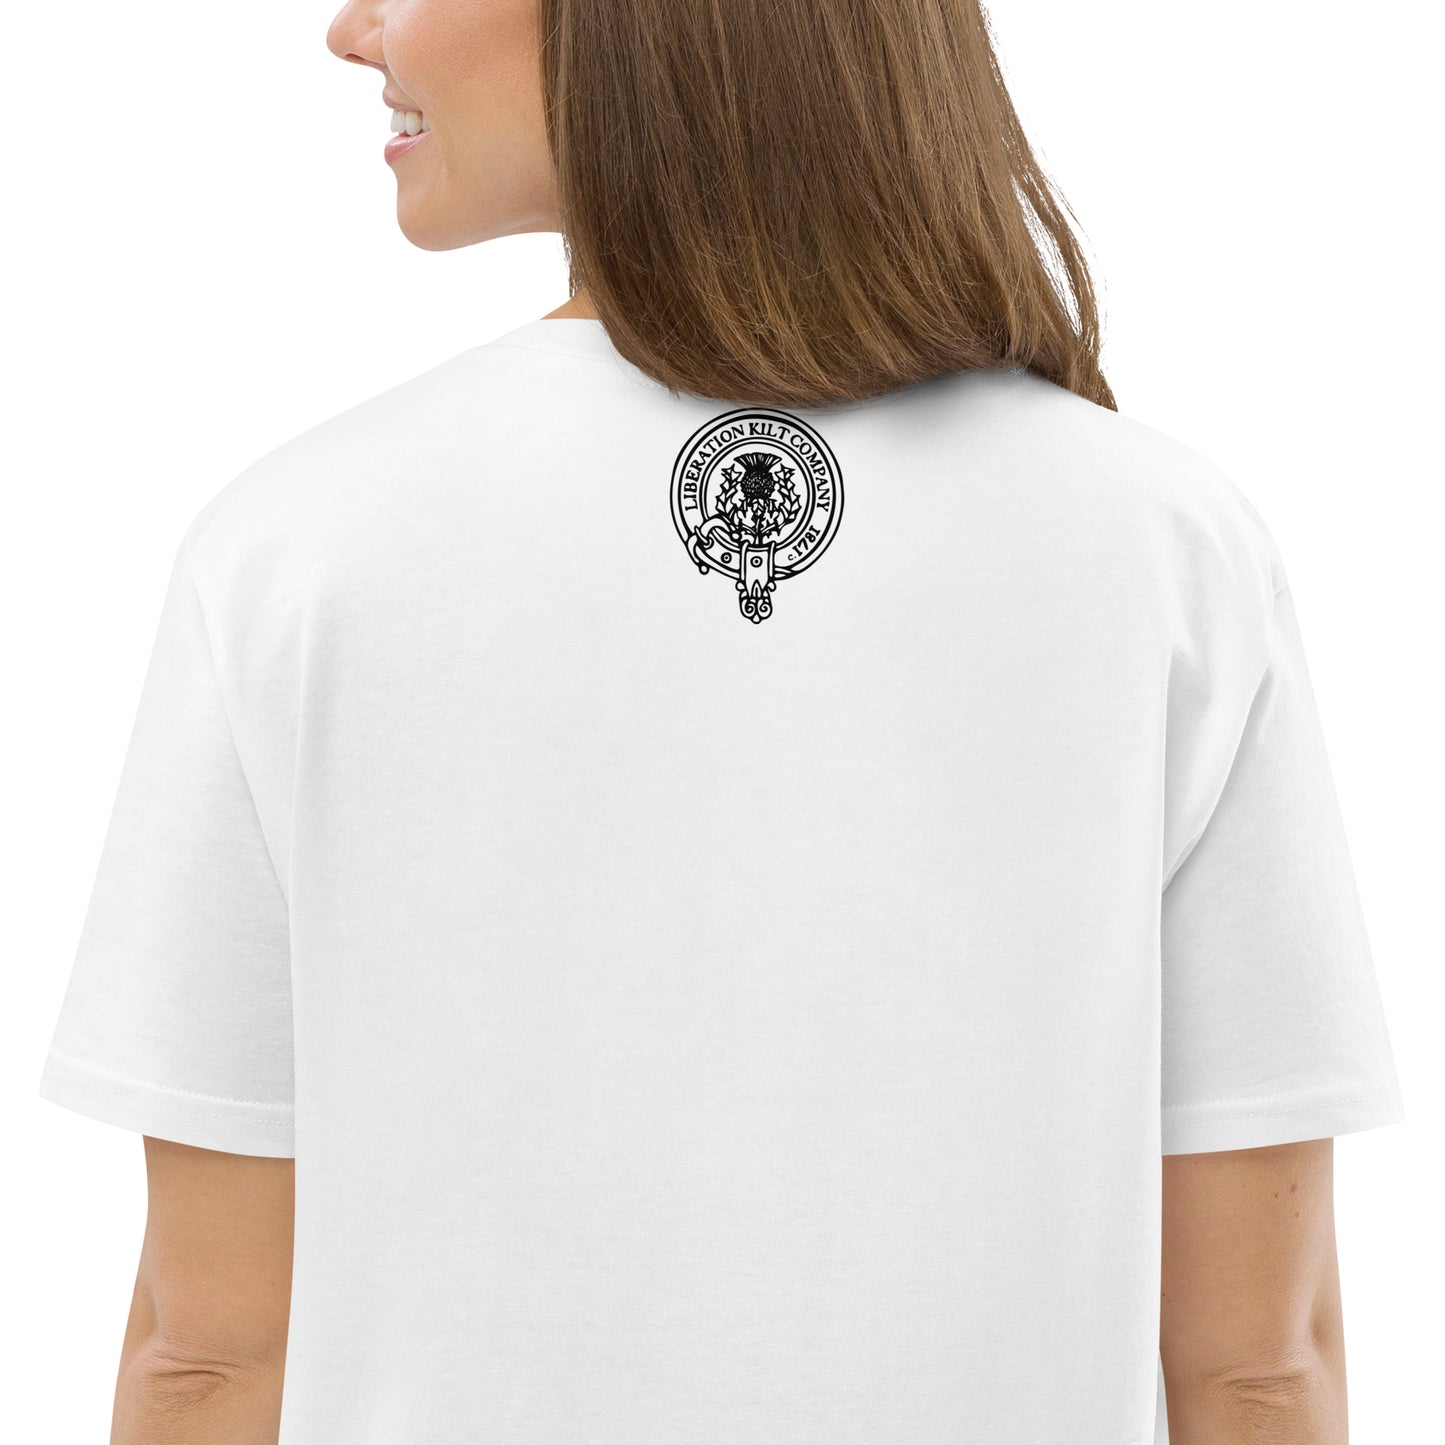 LiberationKilt: 'Skelton in the Wilderness' Organic White Unisex T-Shirt with Color Illustration